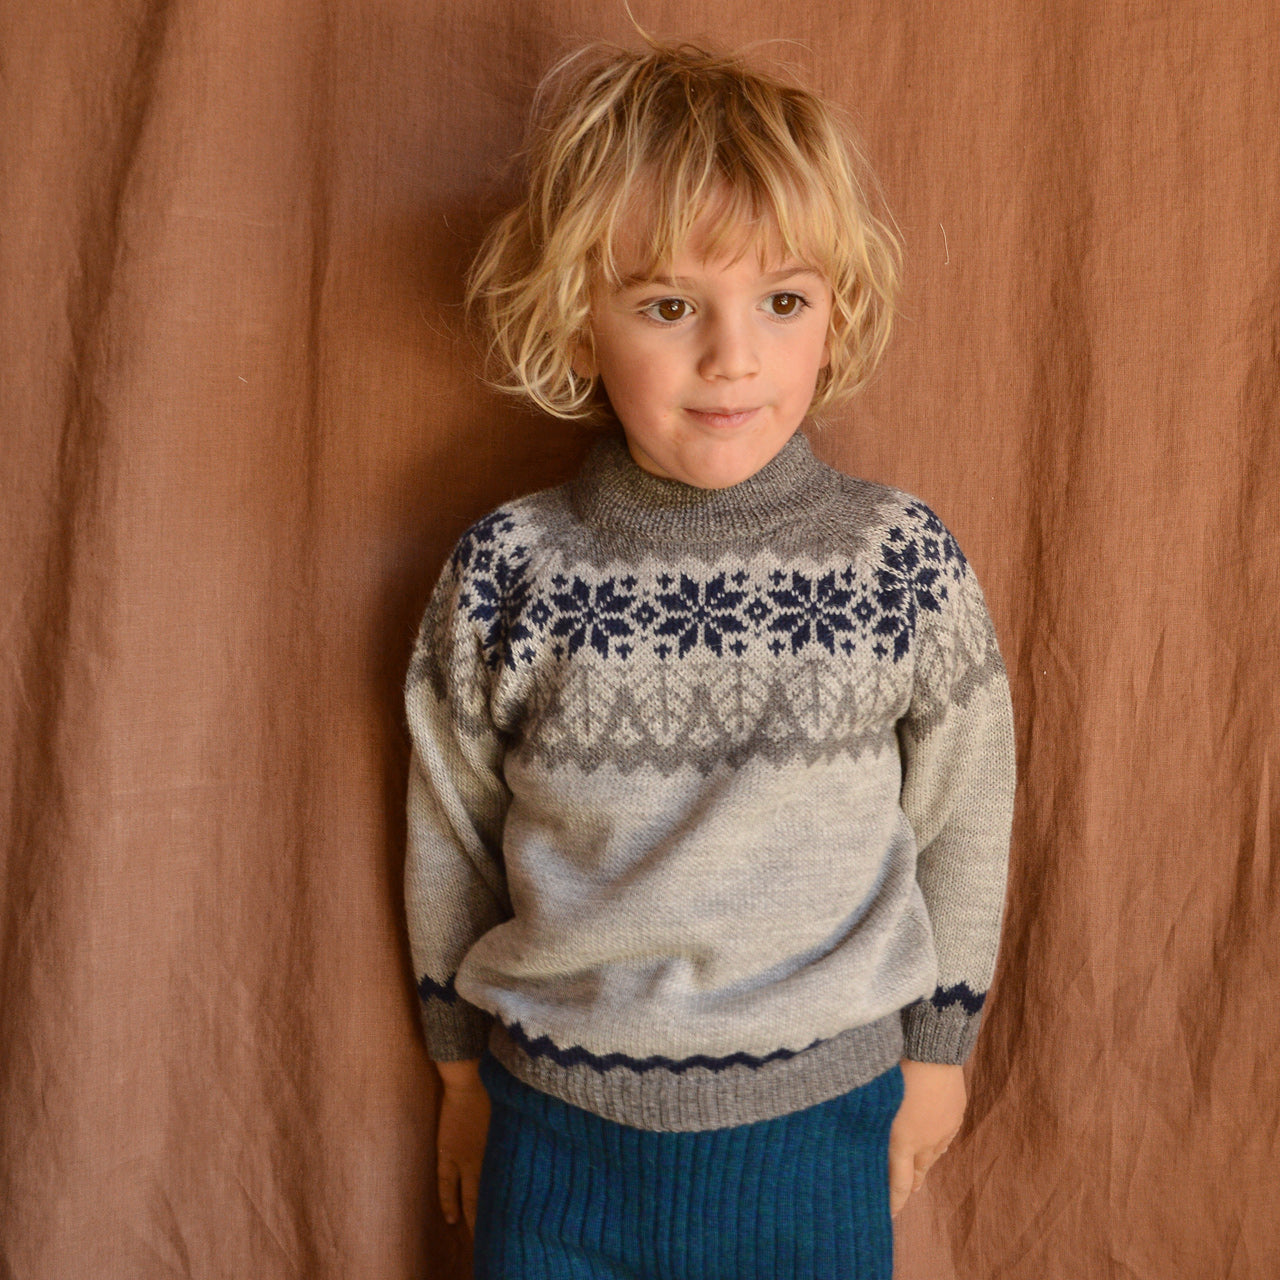 Islandia Sweater in Baby Alpaca - Undyed (5-6y) *Last One!